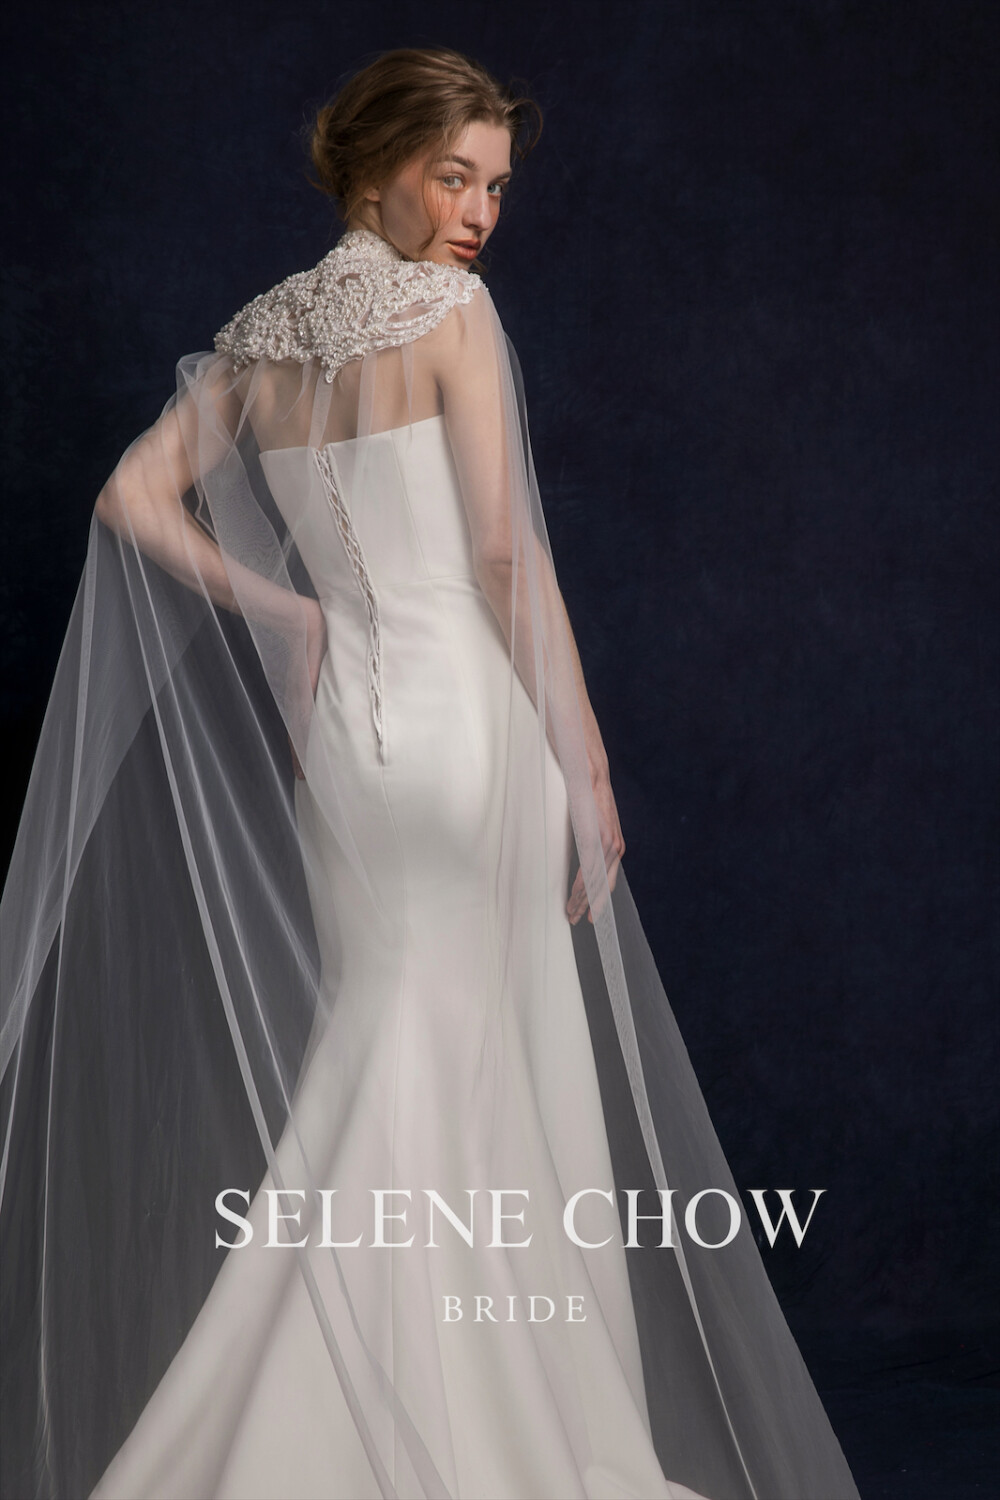 SELENE CHOW 婚纱礼服，图源微博cr：@设计师Selene Chow